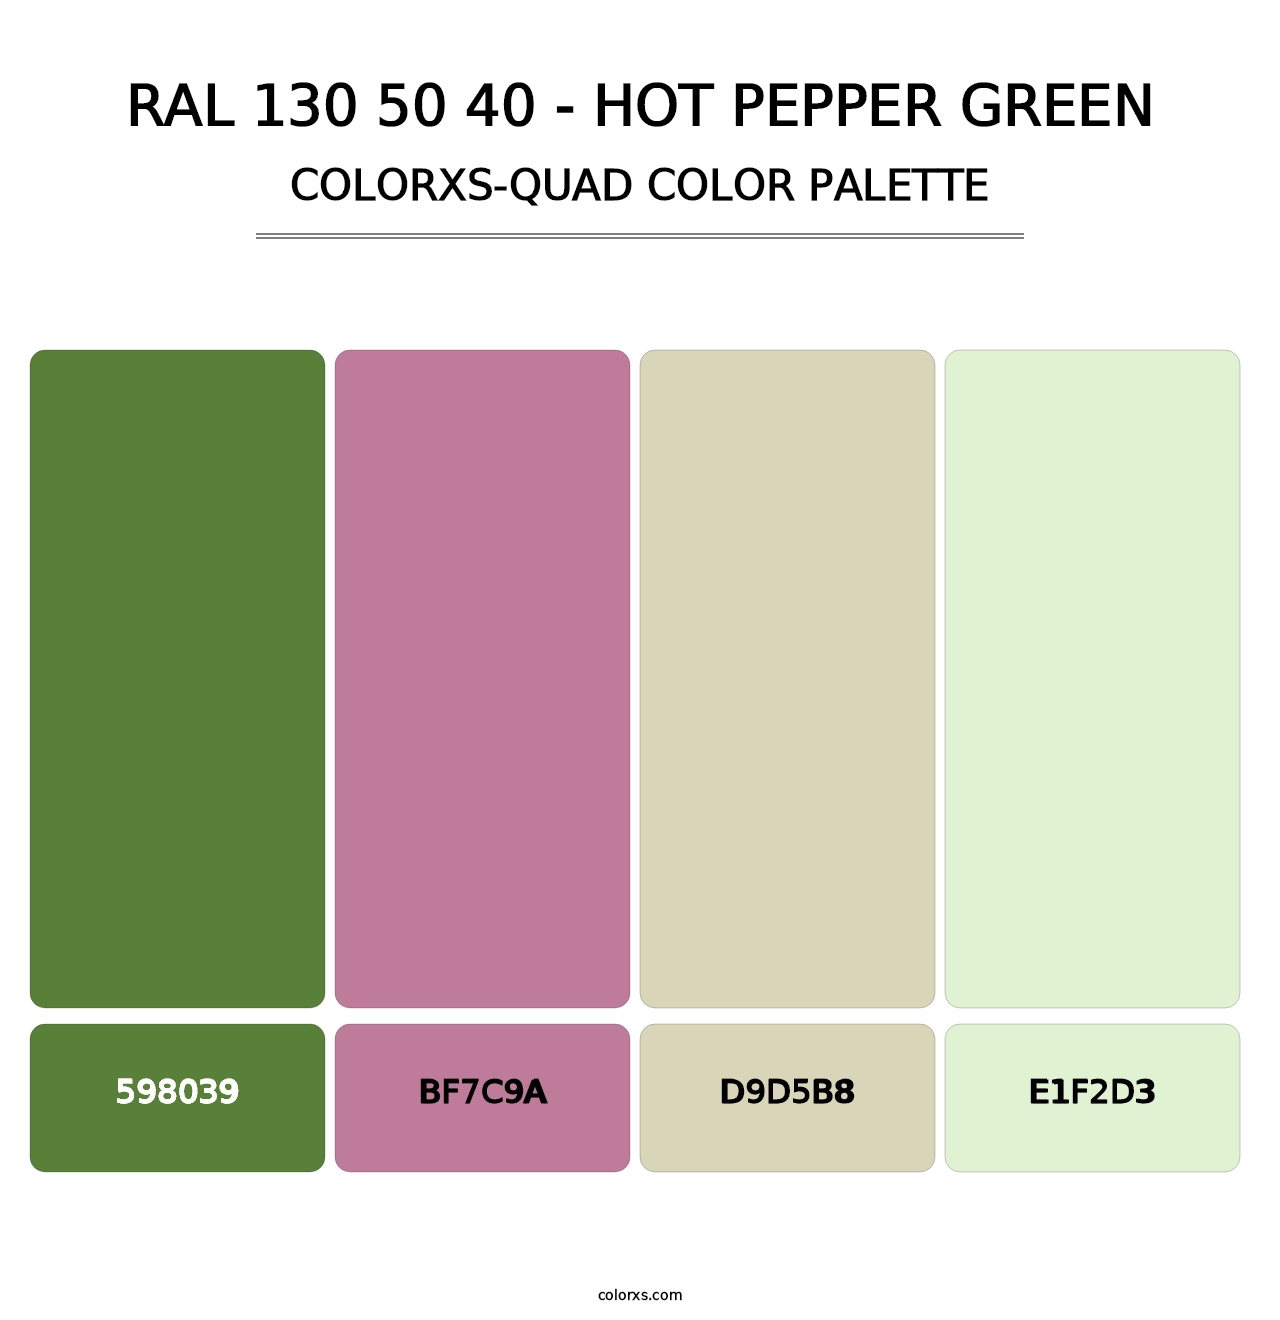 RAL 130 50 40 - Hot Pepper Green - Colorxs Quad Palette